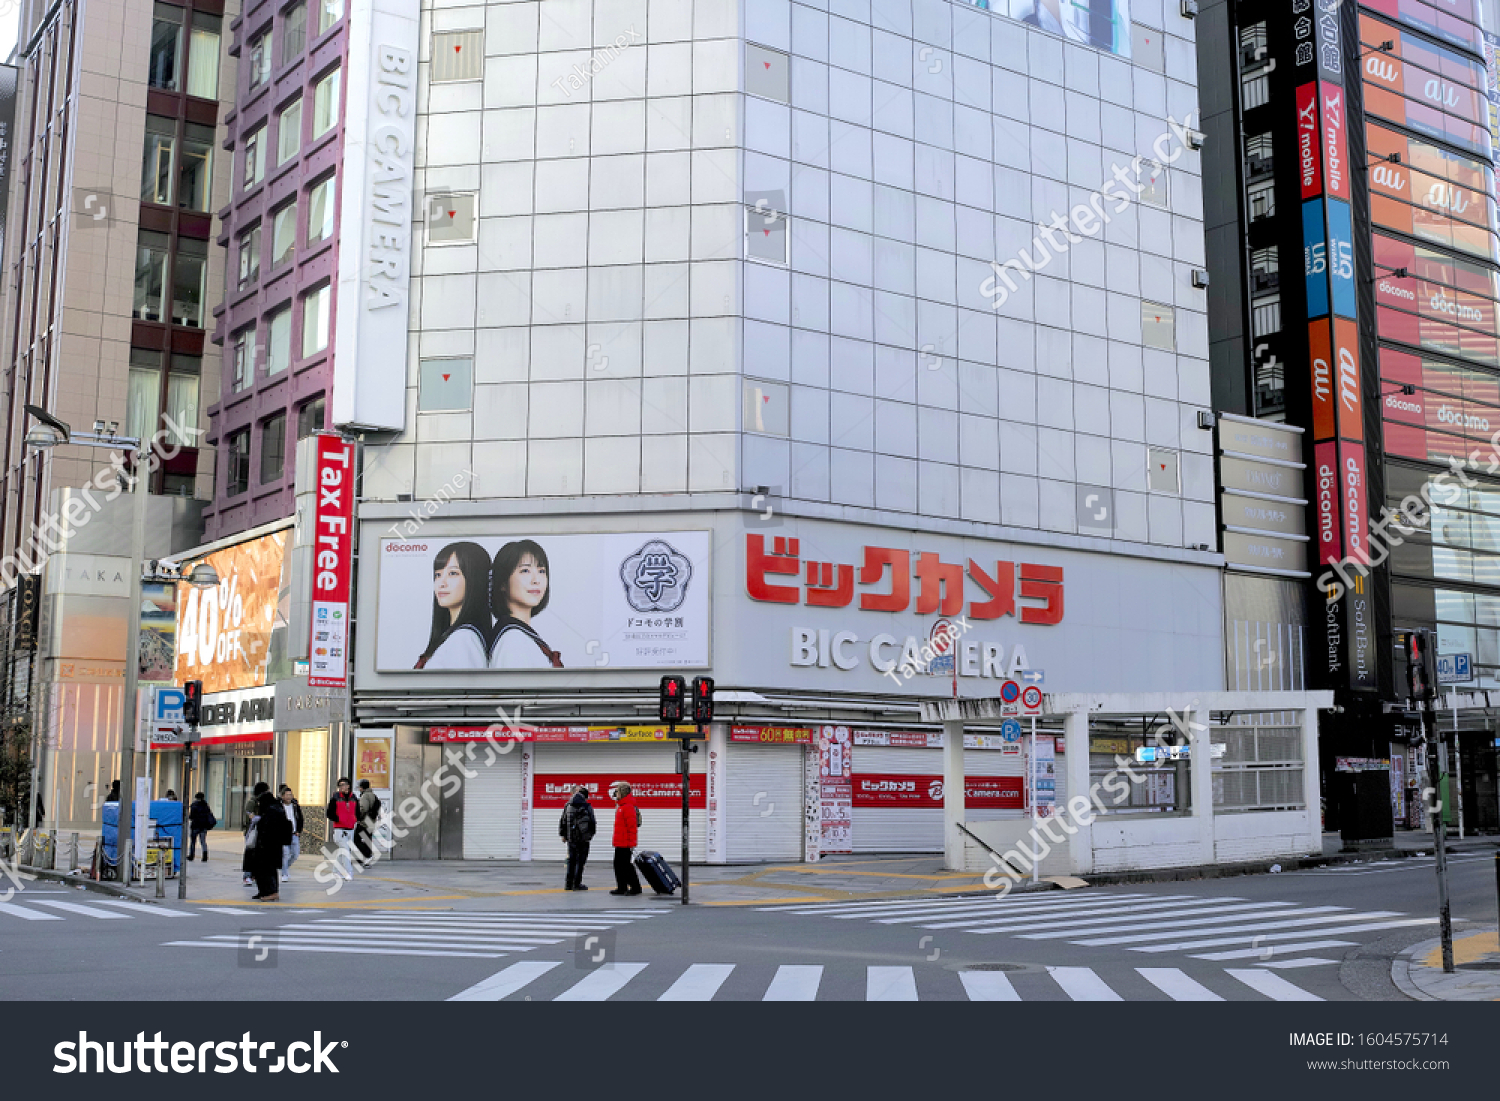 Shinjukutokyo Japan December 31 19 Bic Buildings Landmarks Stock Image